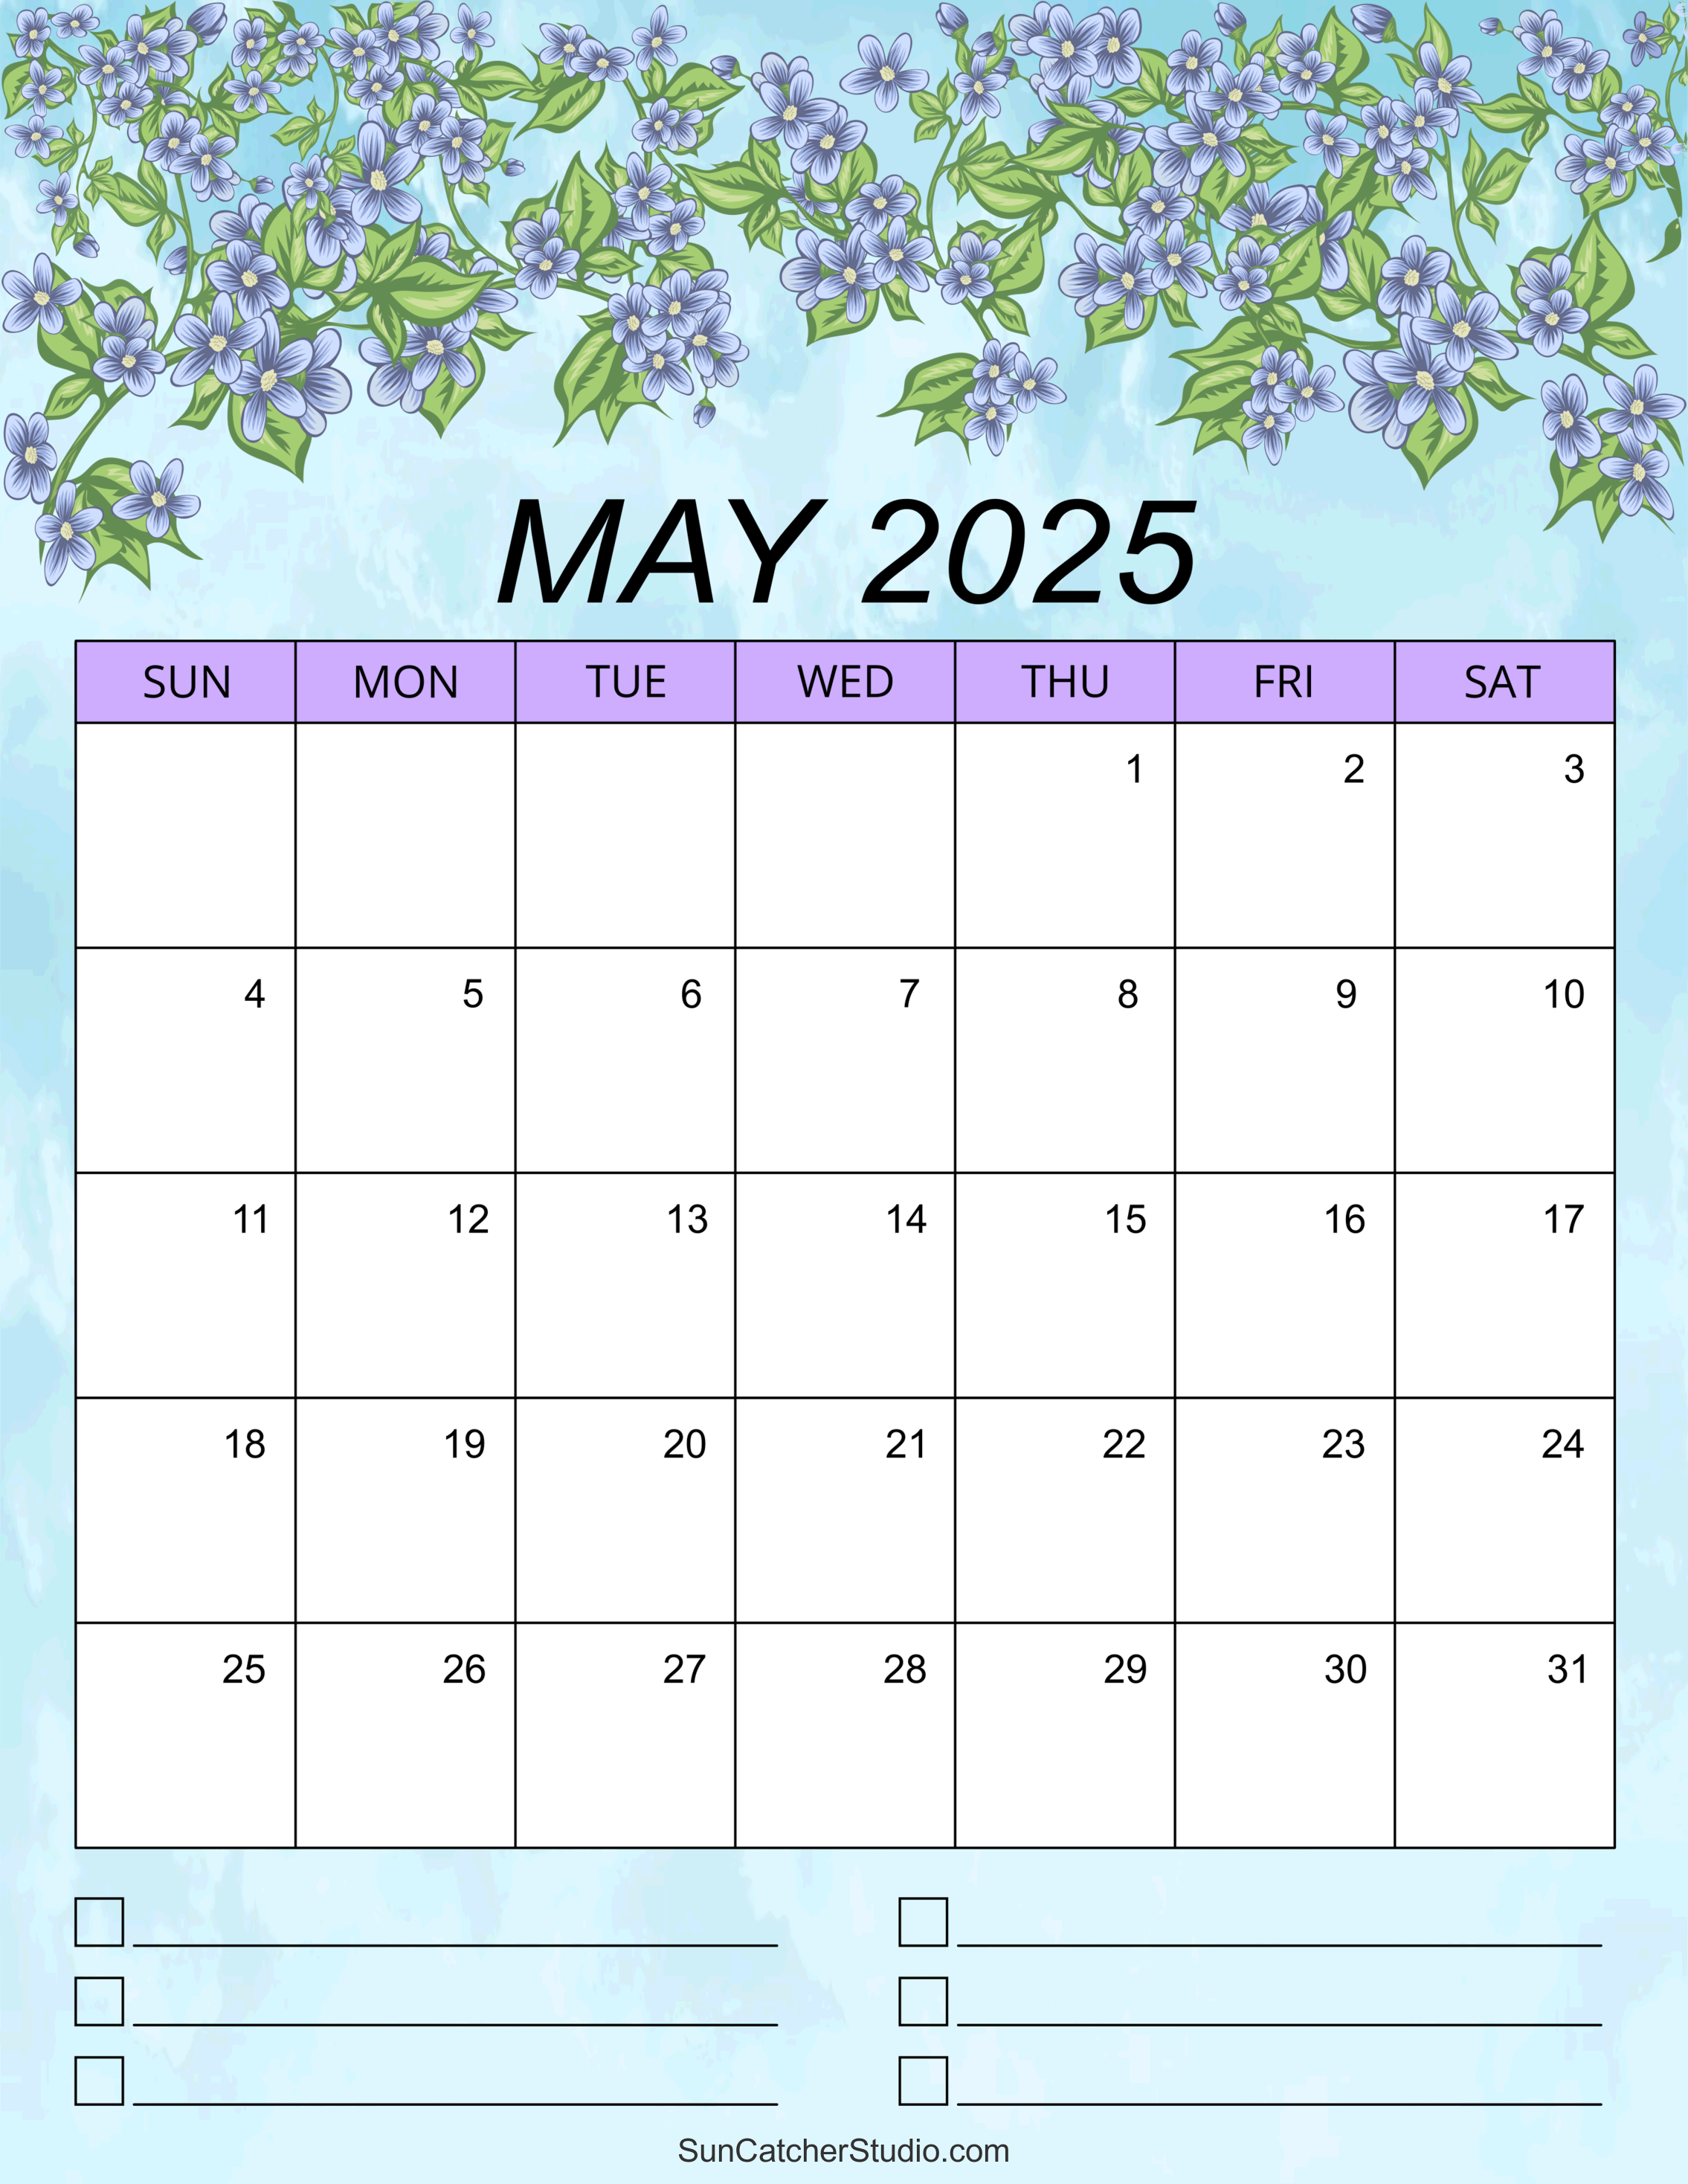 may-2025-calendar-free-printable-diy-projects-patterns-monograms